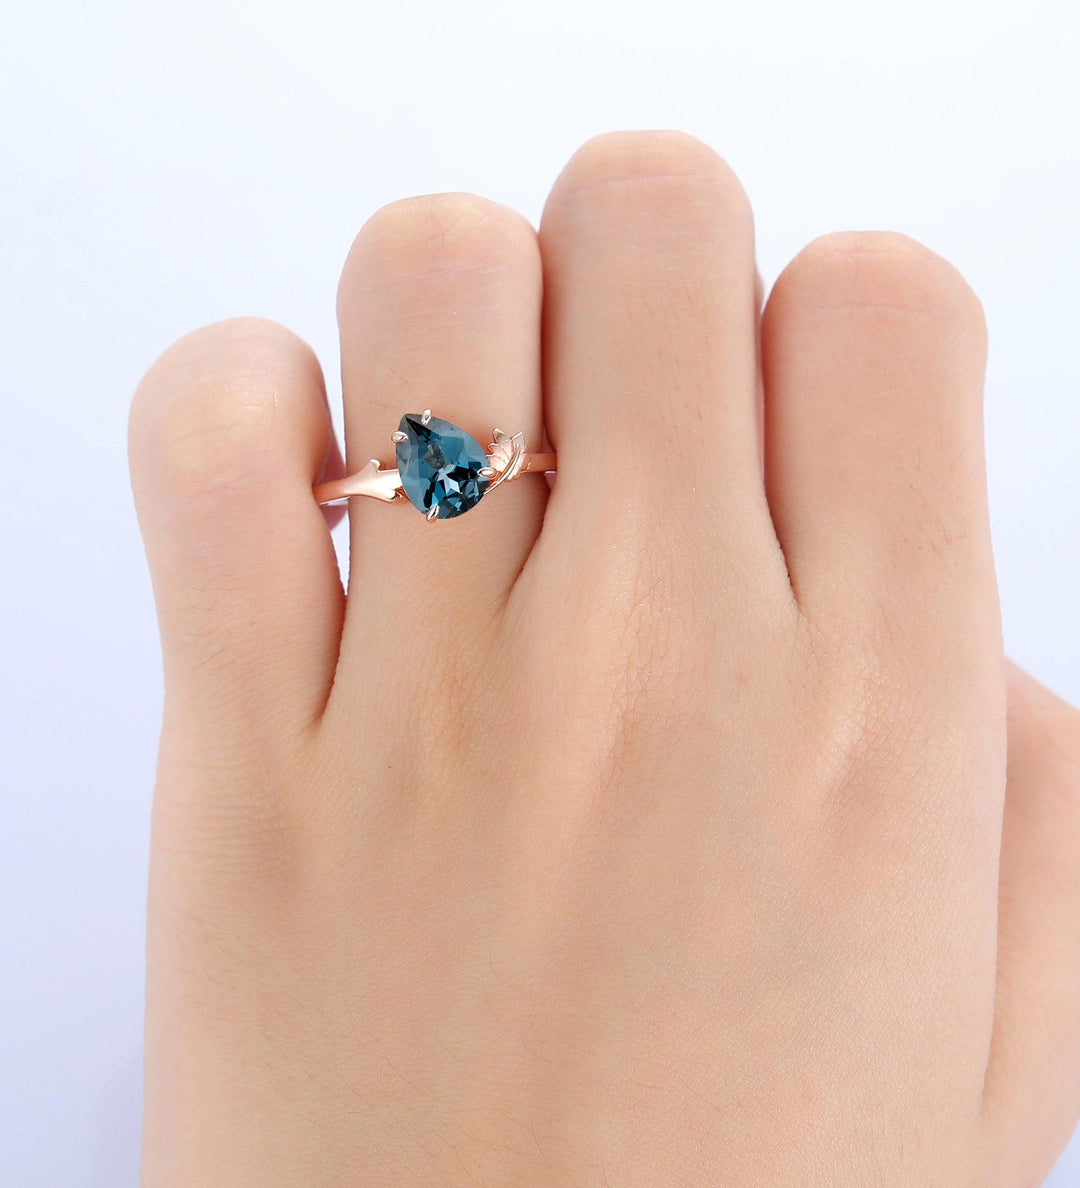 Teardrop Blue Topaz Engagement Ring 14k Rose Gold Wedding Promise Ring Nature Inspired Leaf Branch Ring - Esdomera